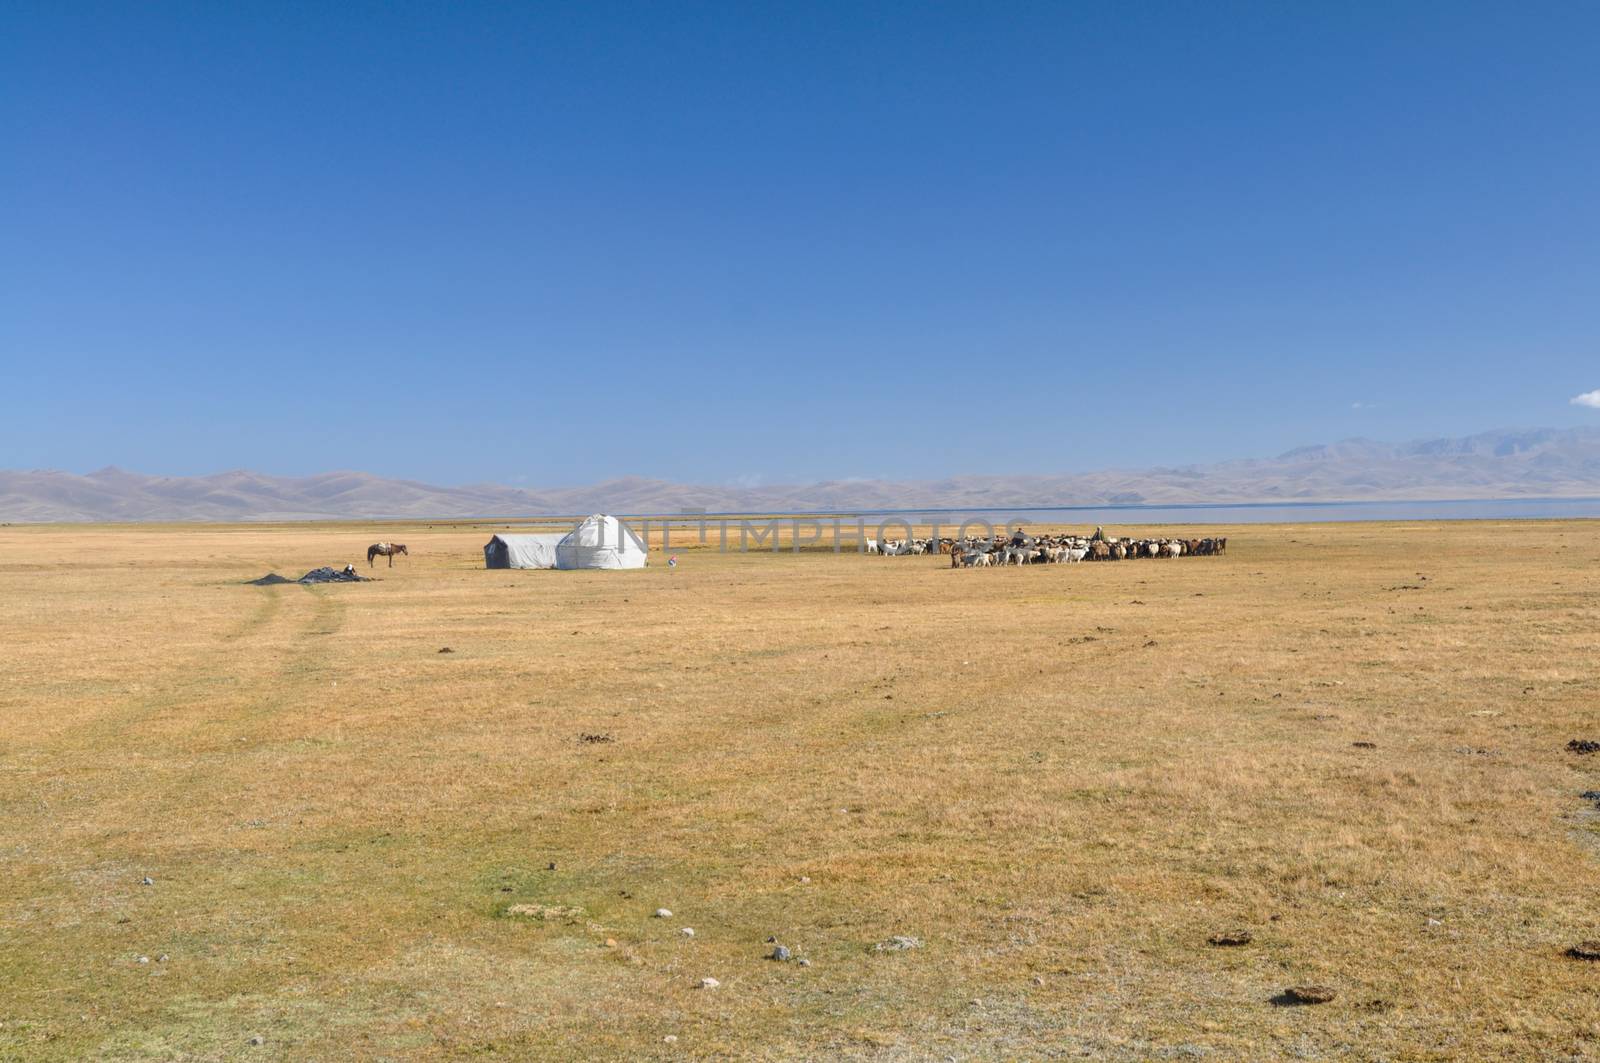 Yurt in Kyrgyzstan by MichalKnitl